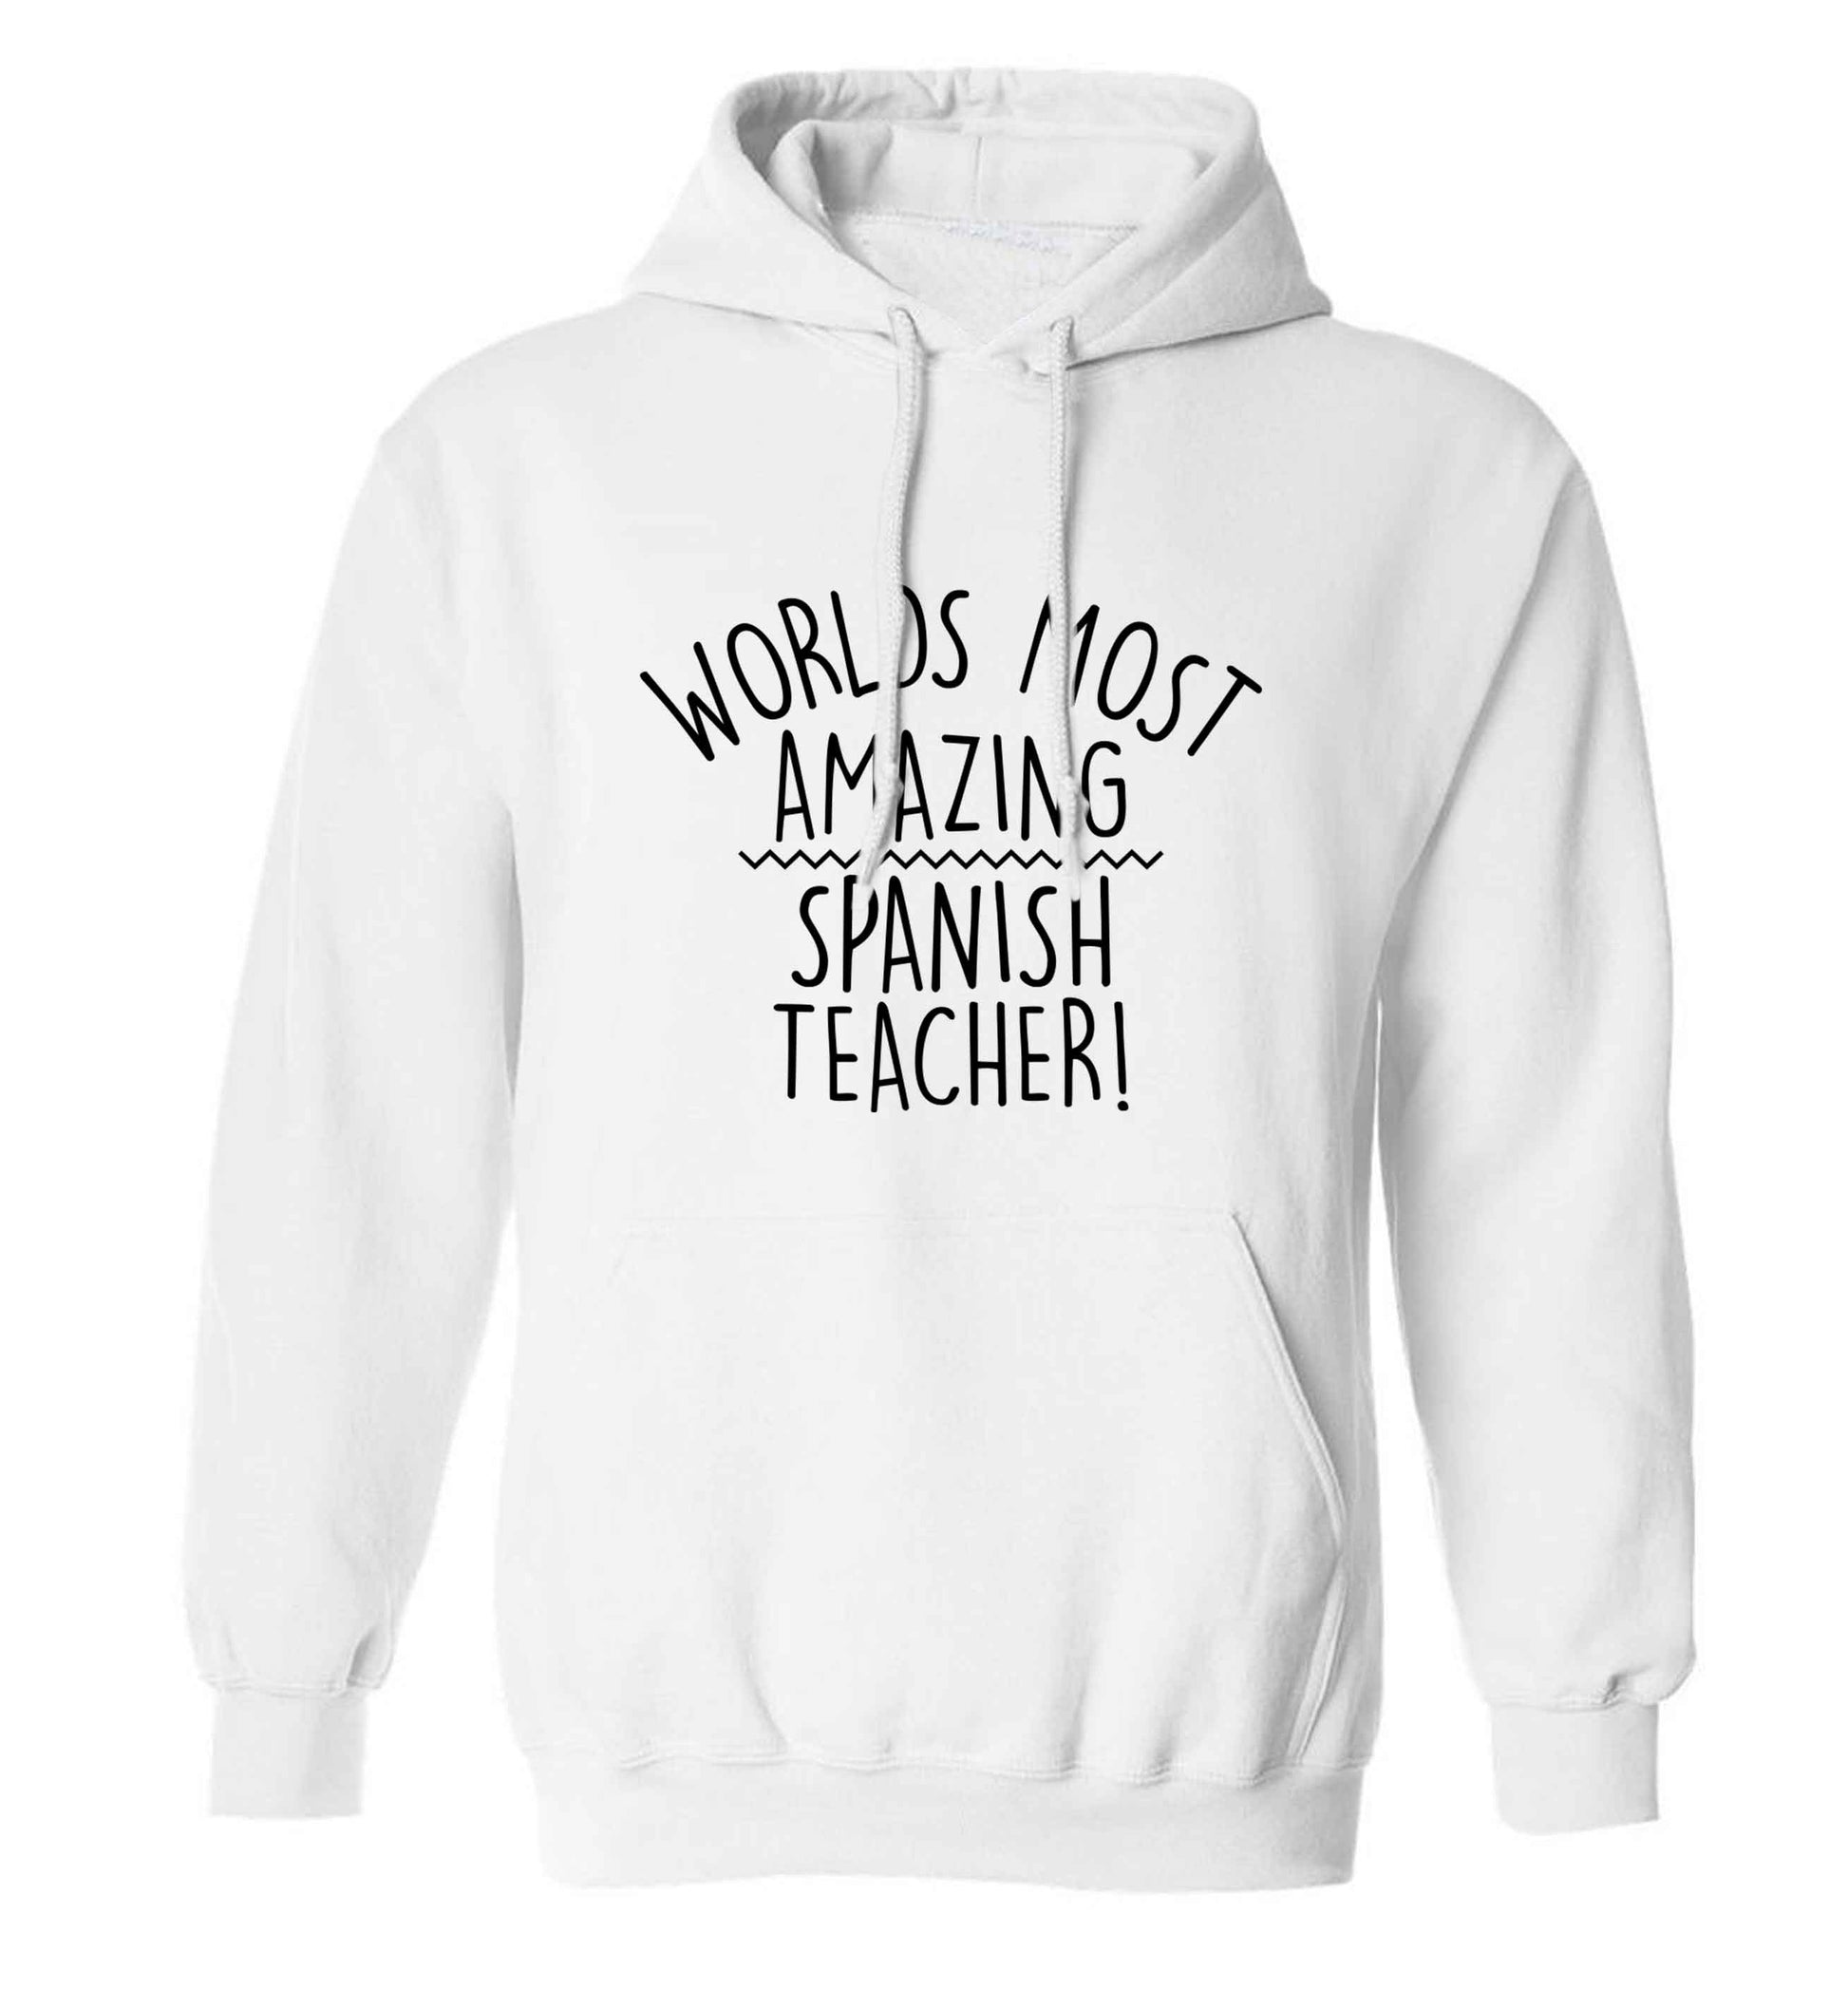 Worlds most amazing Spanish teacher adults unisex white hoodie 2XL